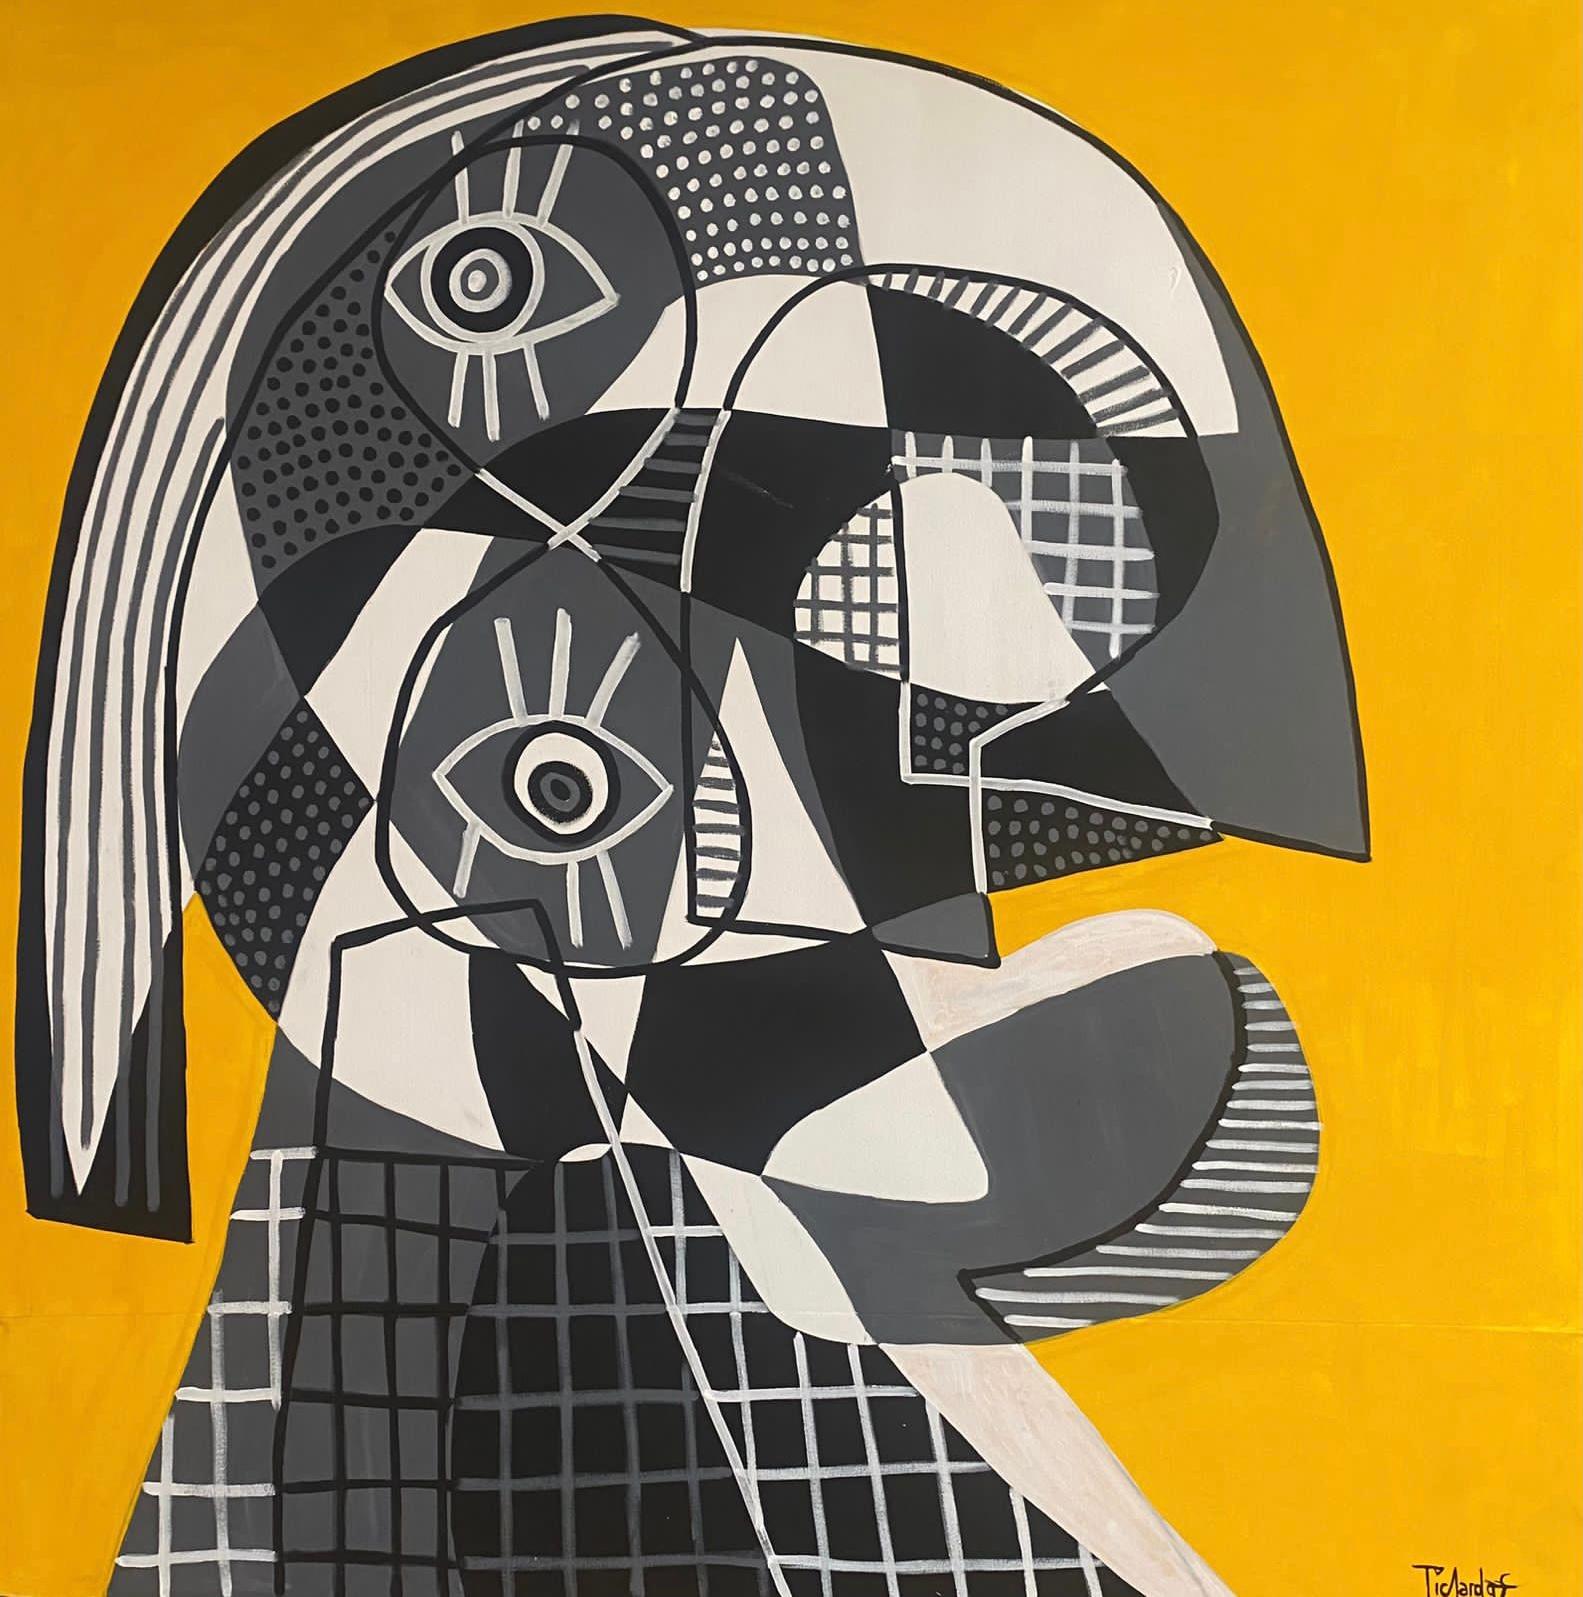 Contemporary Art, Abstract Painting
Acrylic on canvas
190x190cm
Signed 





About the artist
Enrique Pichardo (Mexico City, 1973) graduated from Escuela Nacional de Pintura, Escultura y Grabado (ENPEG) “La Esmeralda”. As a Mexican Contemporary